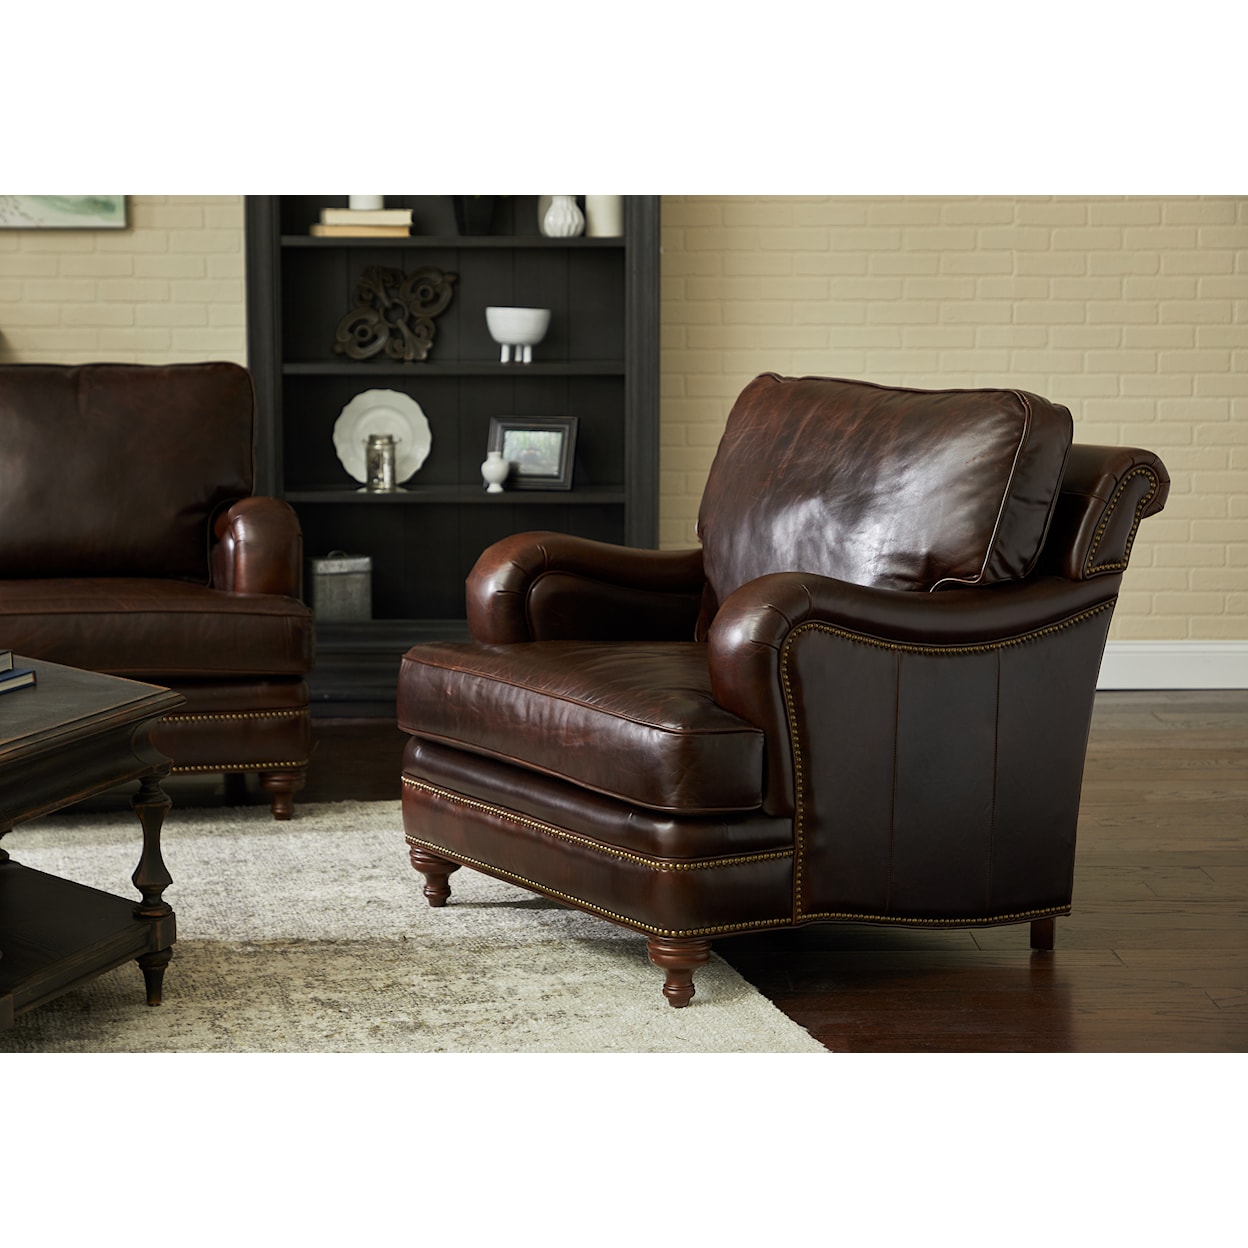 Pulaski Furniture Oliver Upholstered Chairs